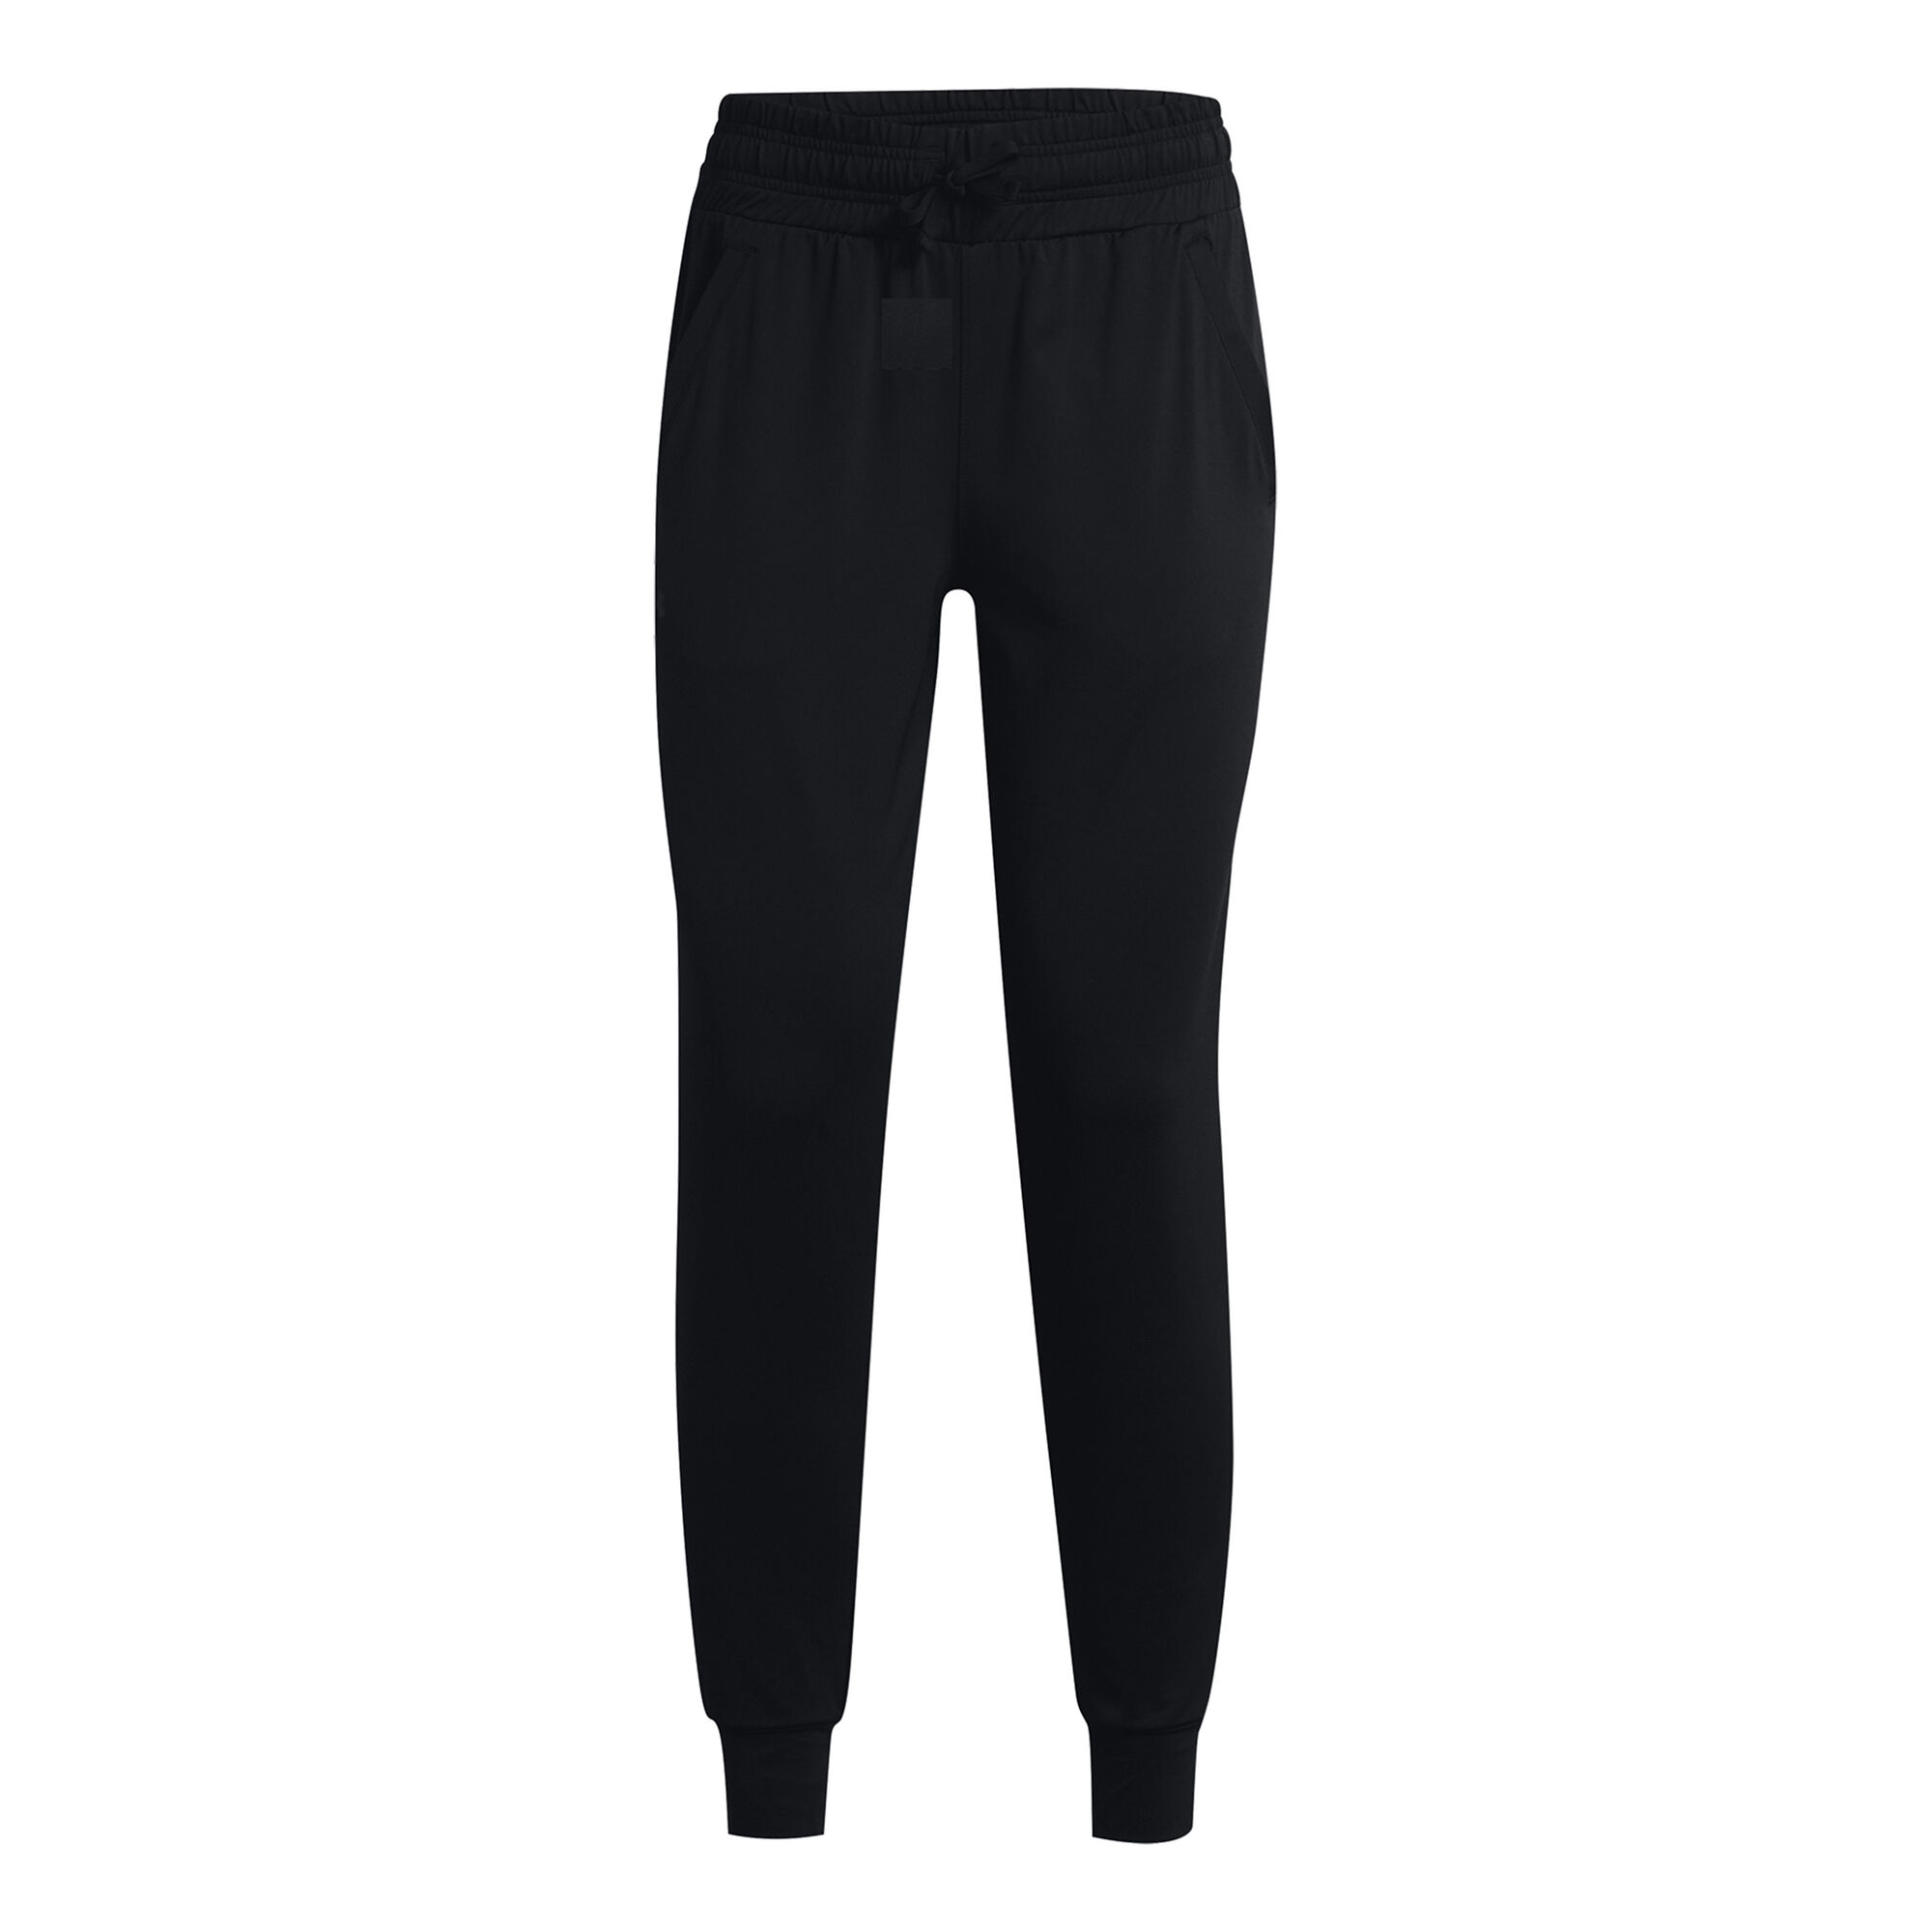 Buy Under Armour Heatgear New Fabric Training Pants Women Black